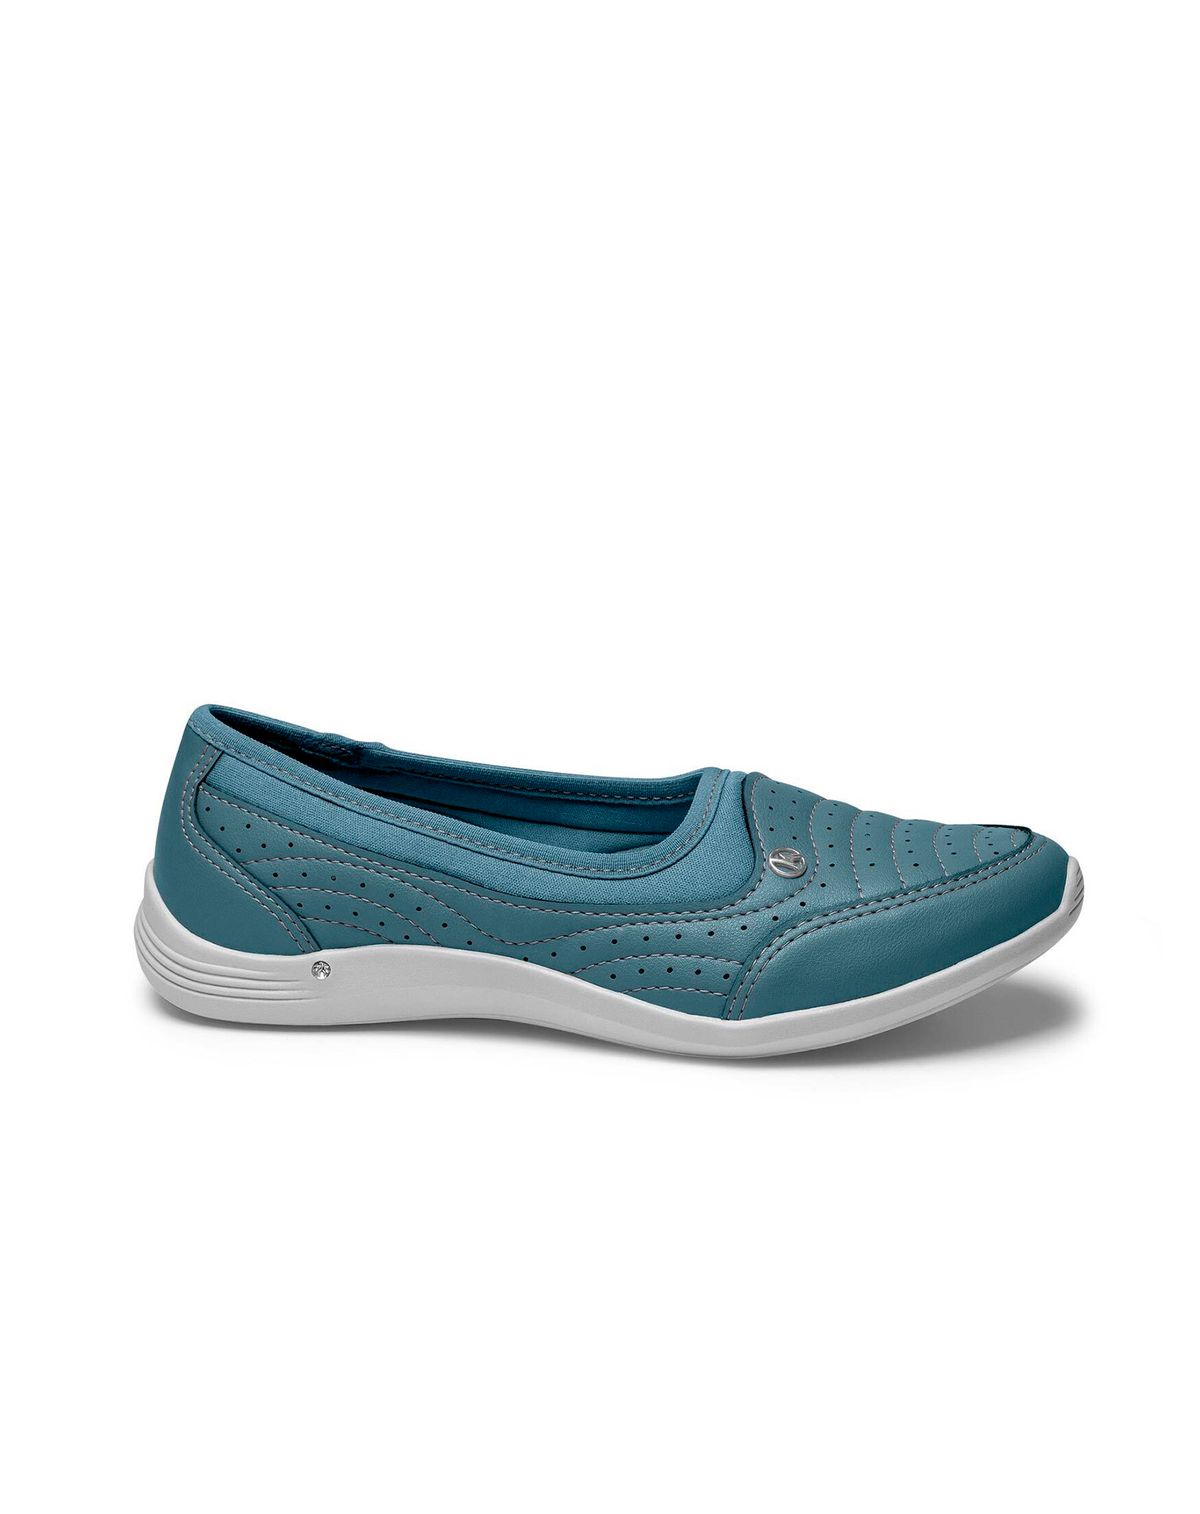 671075001-sapatilha-casual-feminina-slipper-kolosh-azul-34-998